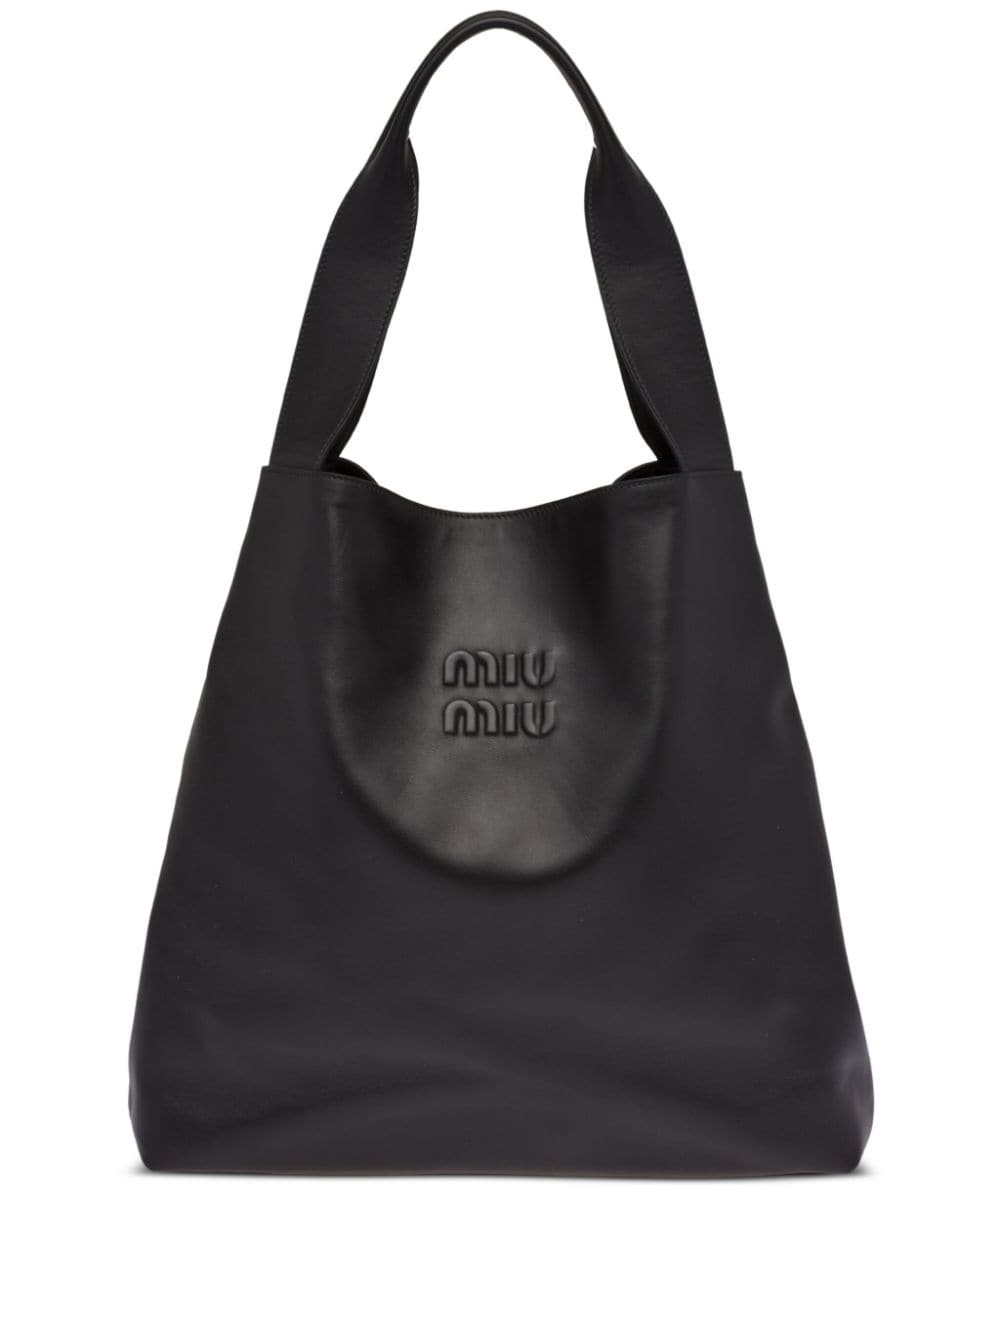 Miu Miu Women's Leather Hobo Bag - Black - Hobo Bags